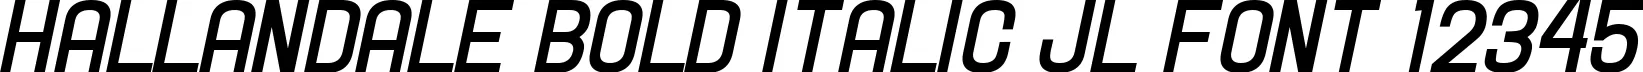 Dynamic Hallandale Bold Italic JL Font Preview https://safirsoft.com